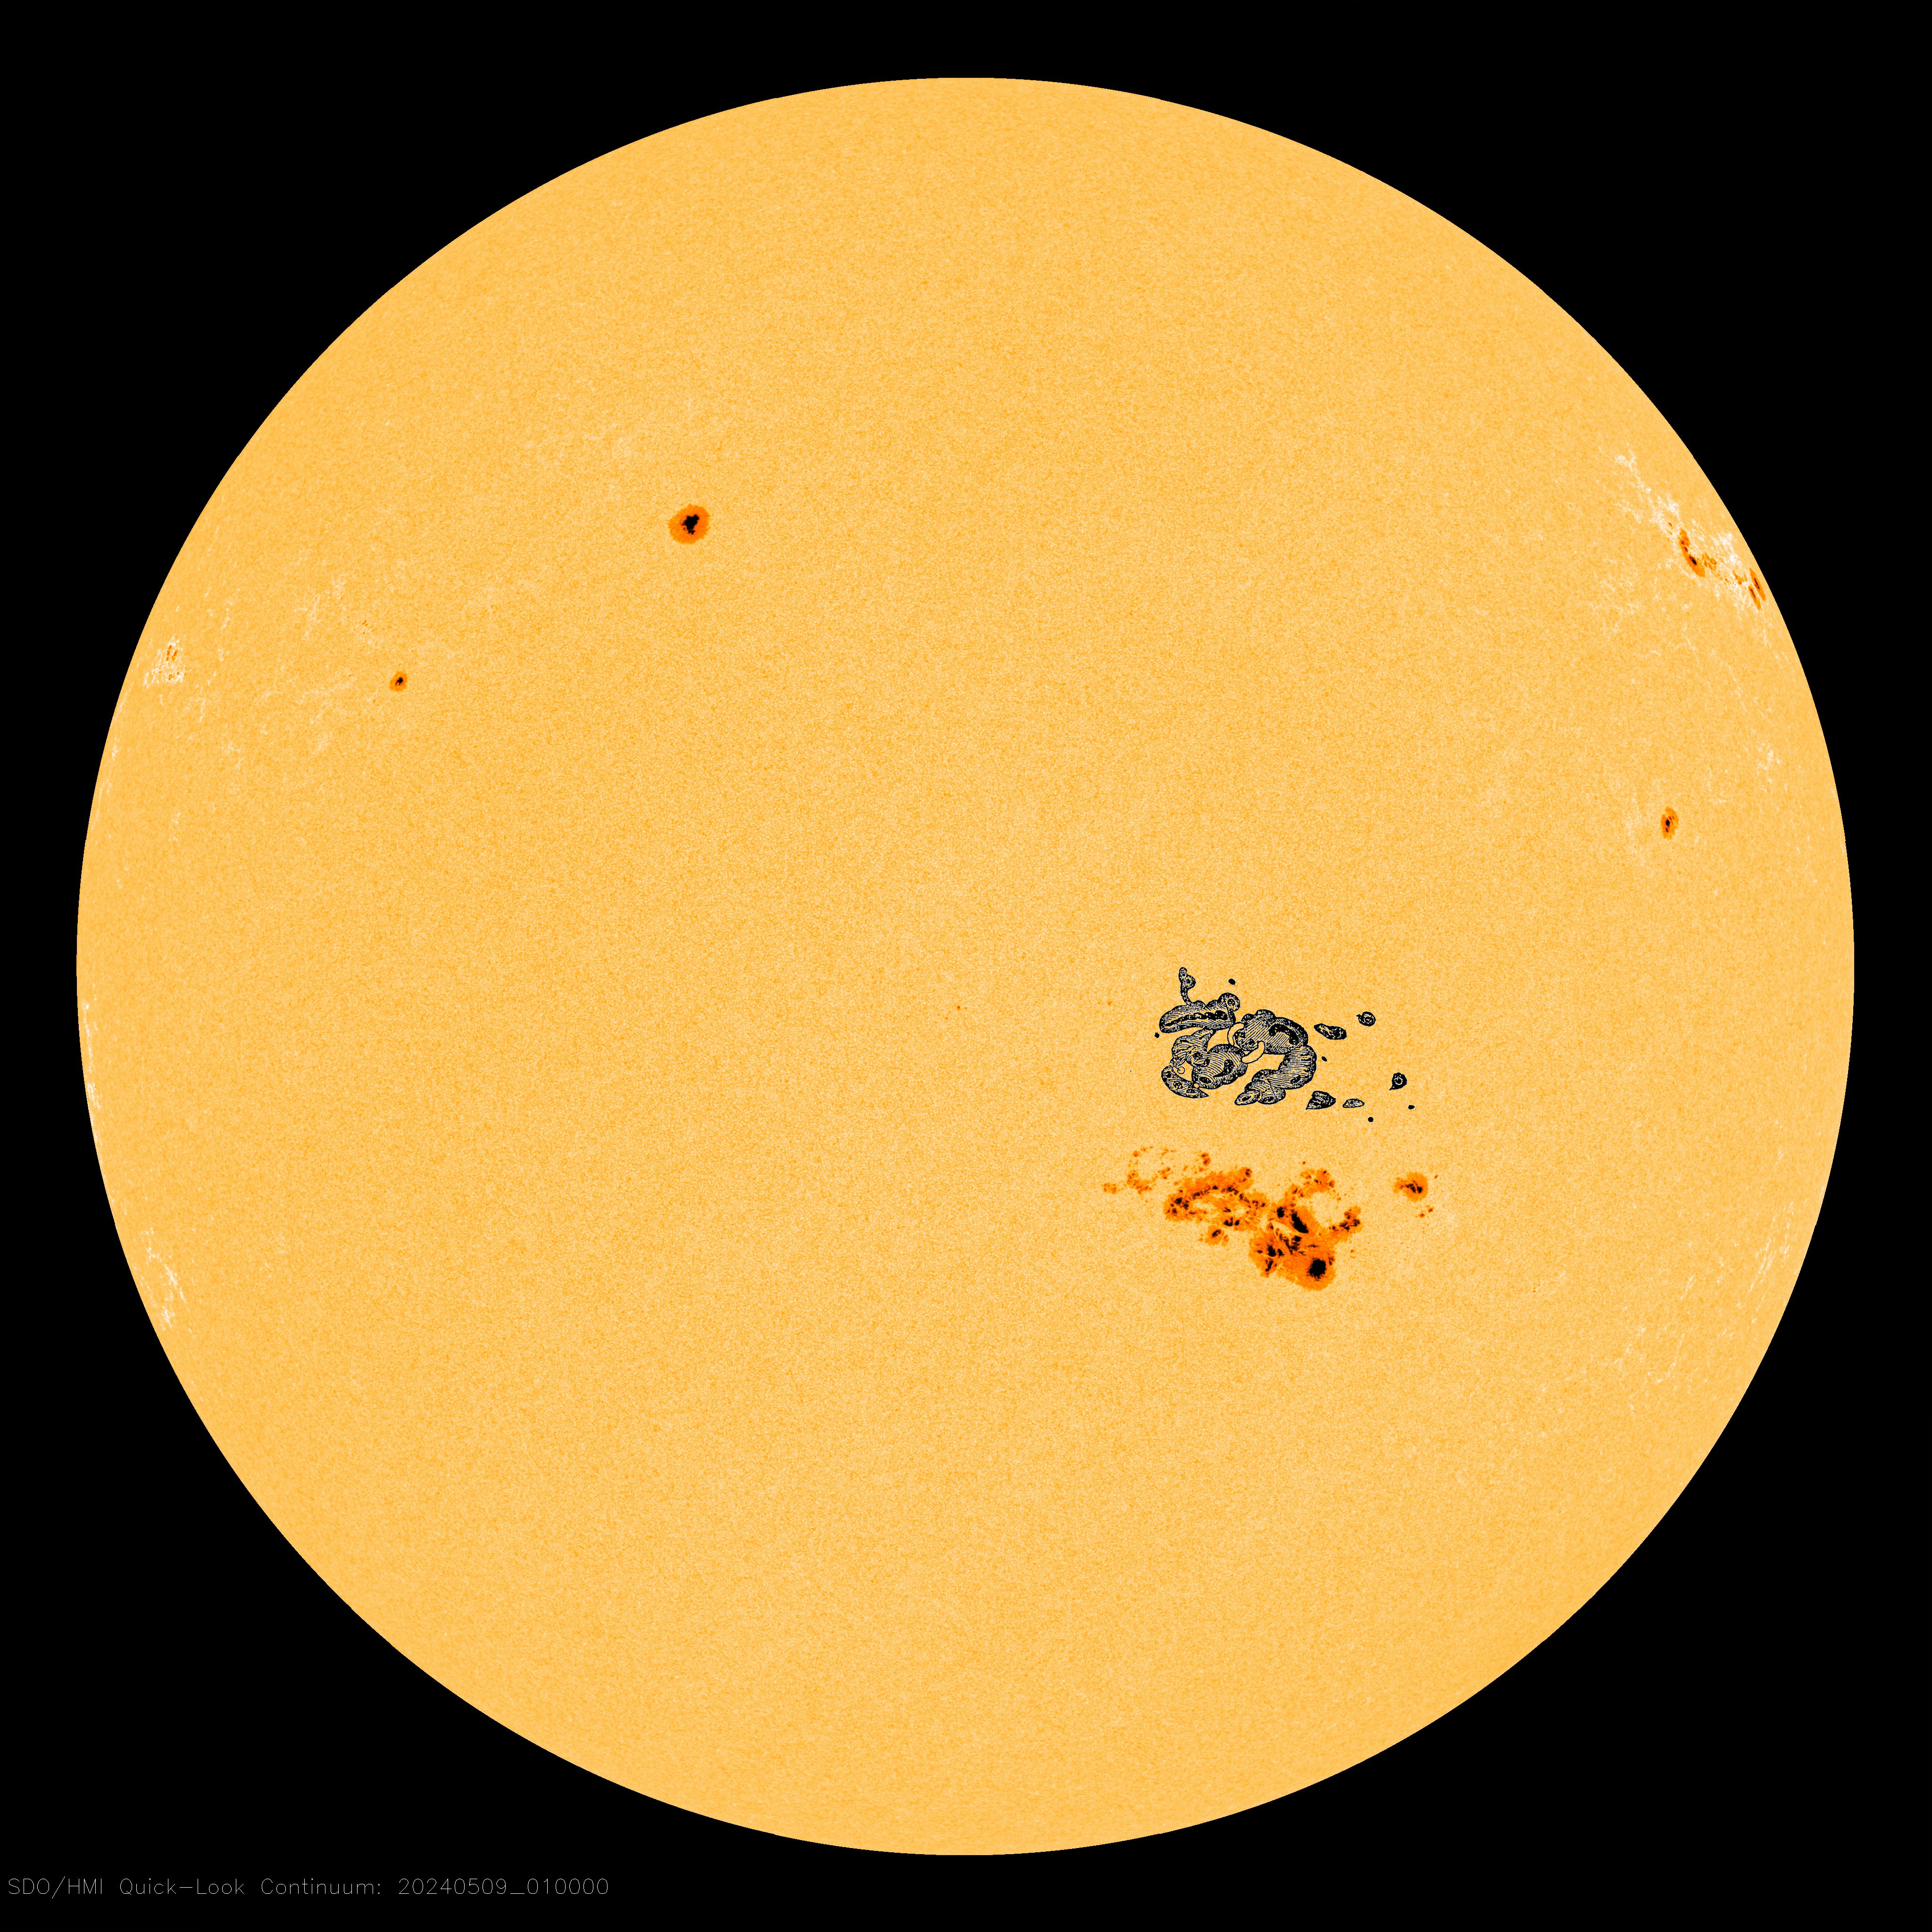 gargantuan sunspot 15-earths wide shoots powerful x-class flare toward earth, triggering radio blackouts